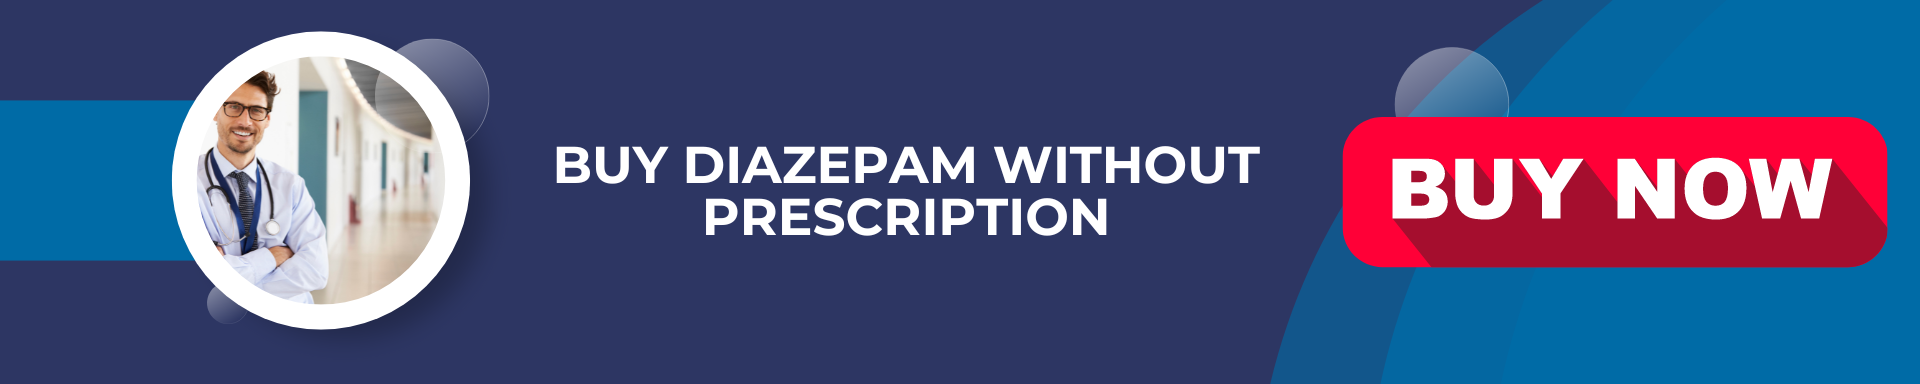 Buy Diazepam without prescription